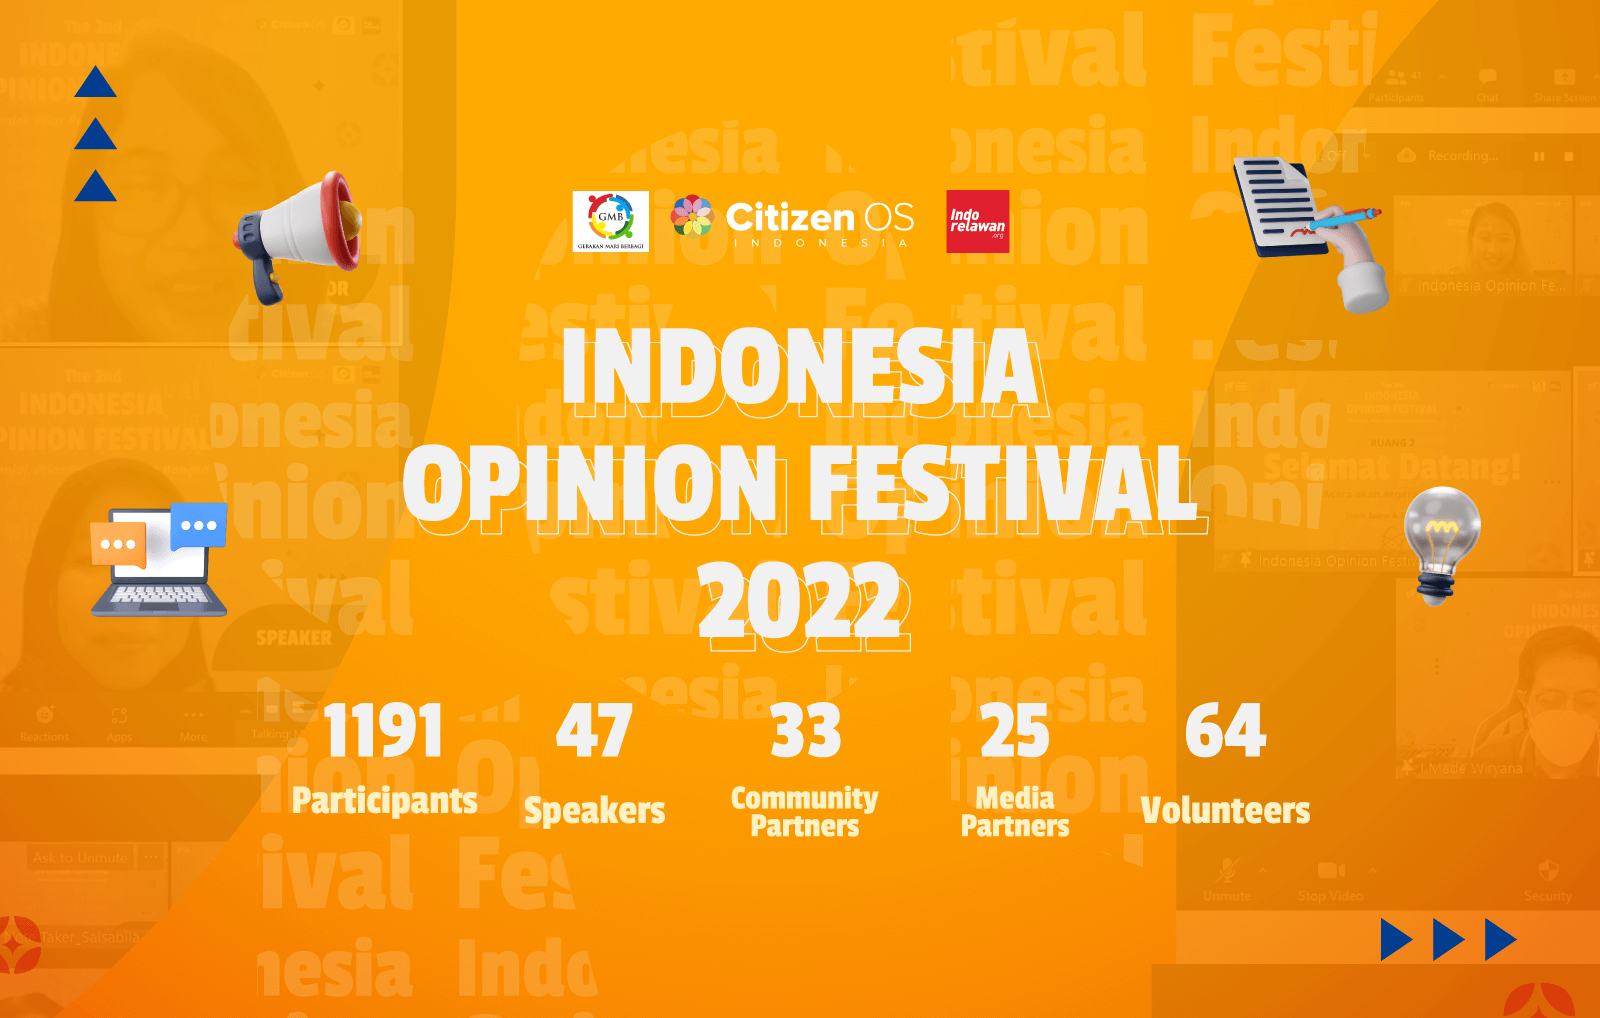 Indonesia Opinion Festival statistics infographic.